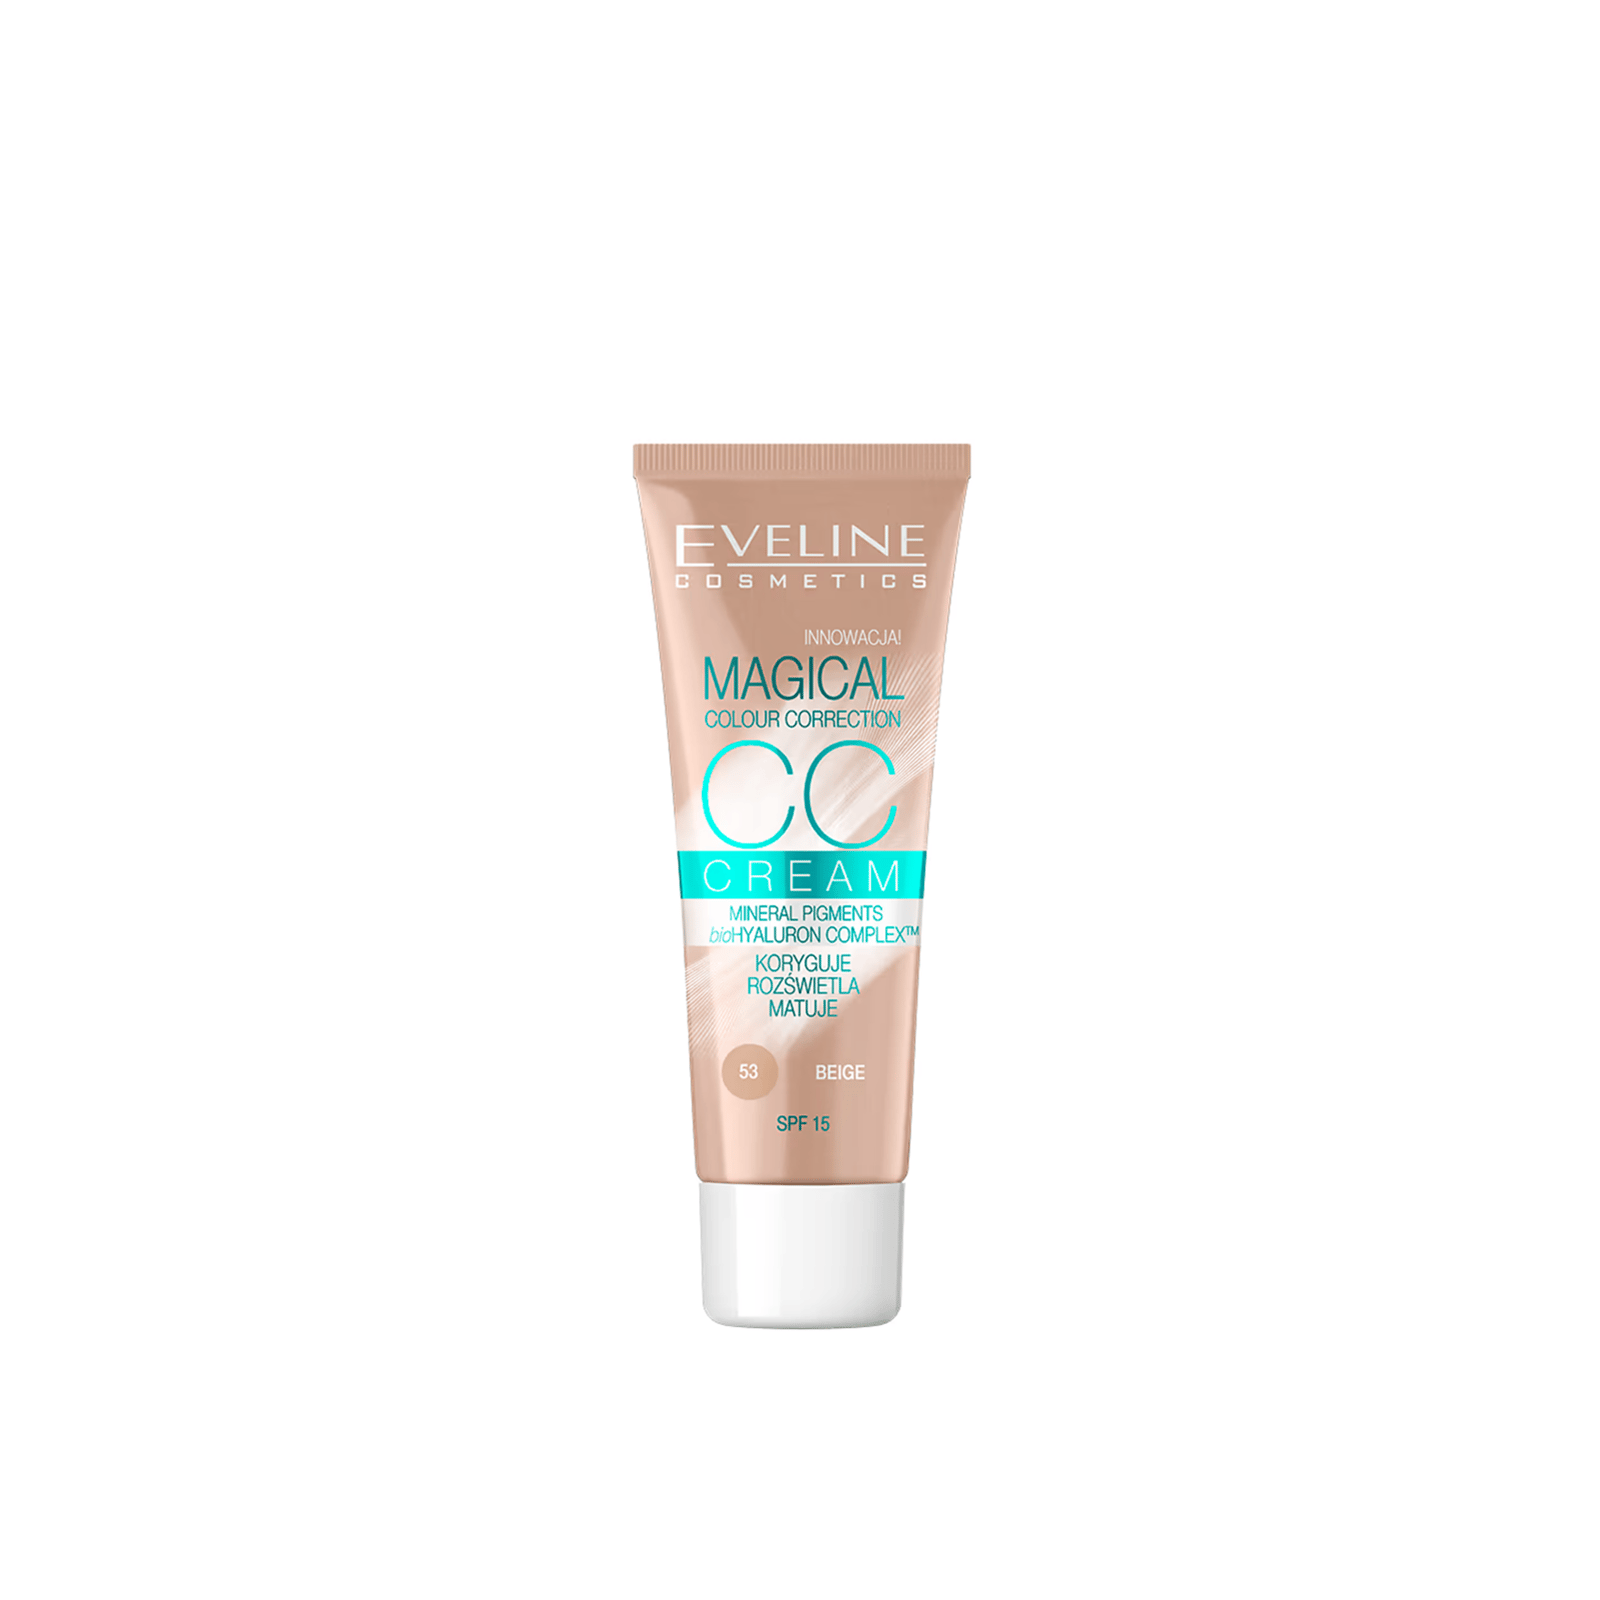 Eveline Cosmetics Magical Colour Correction CC Cream SPF15 53 Beige 30ml (1.06 fl oz)